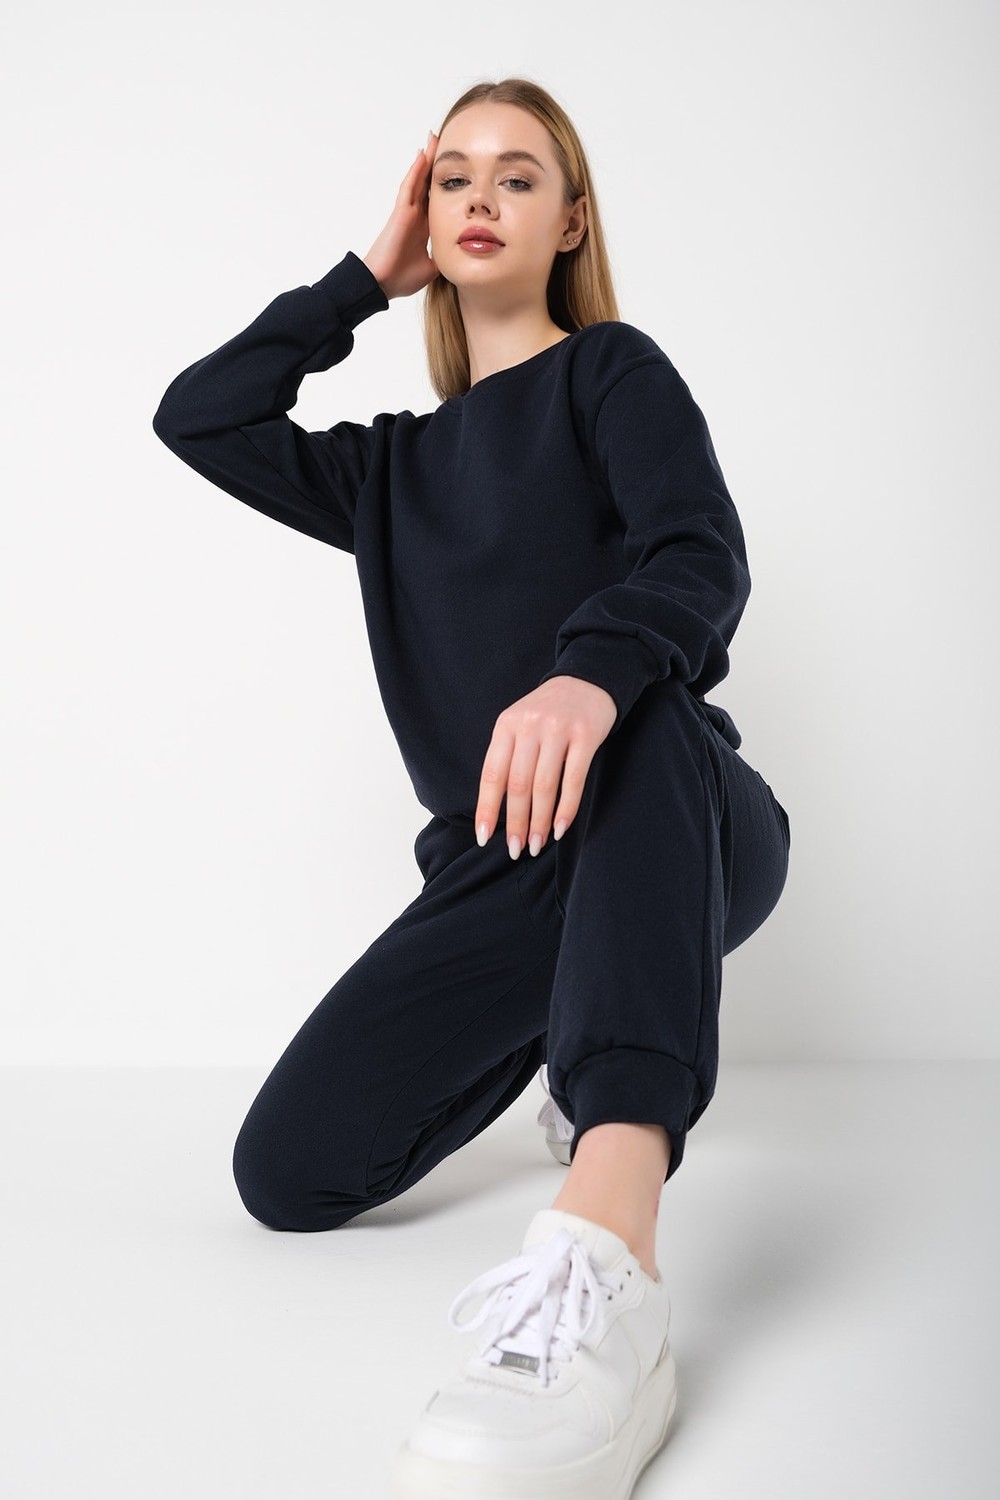 K&H TWENTY-ONE Women's Navy Blue Cotton Pajamas Set